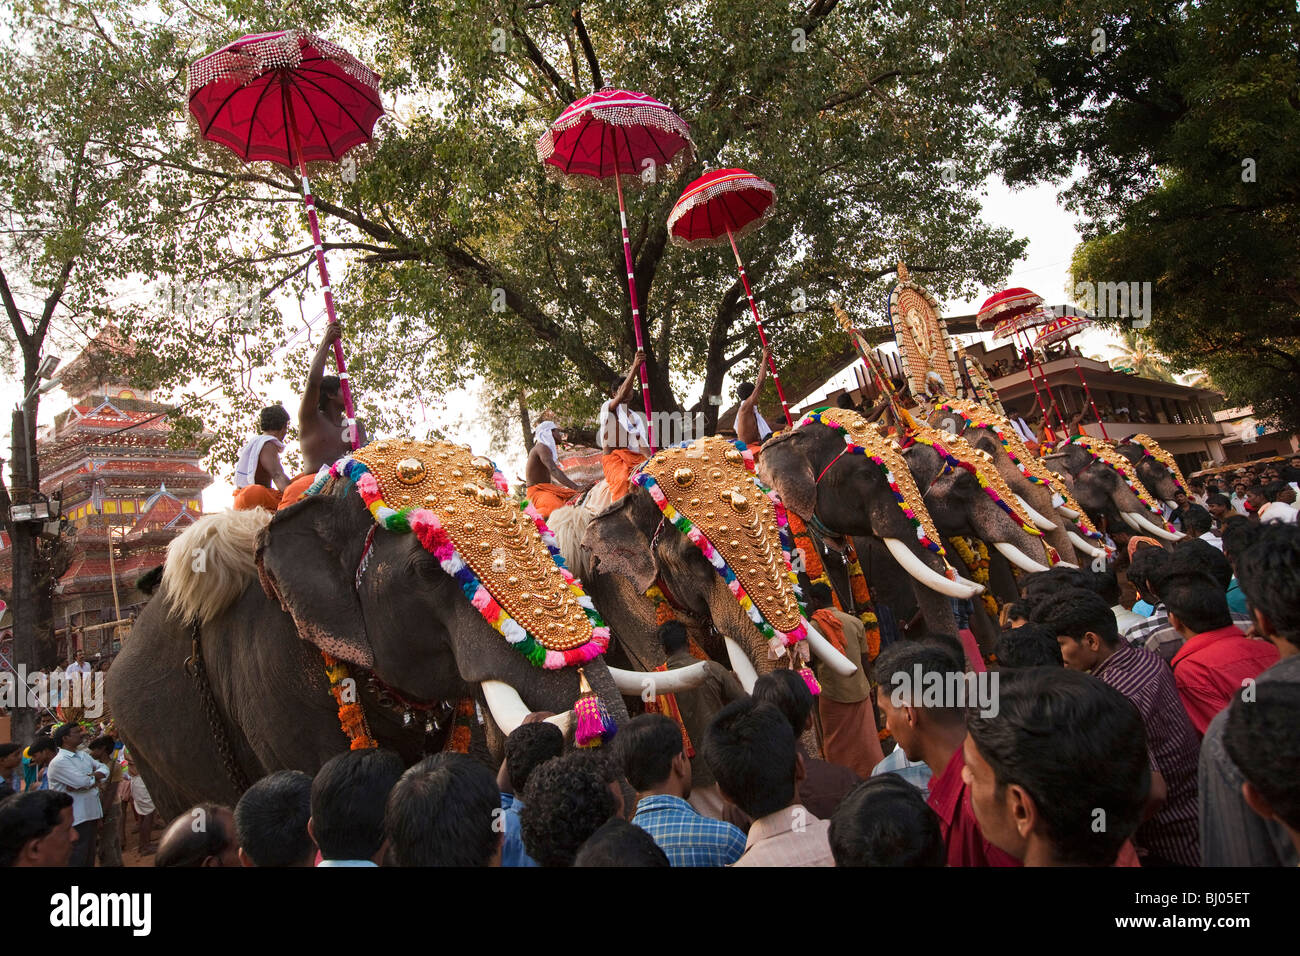 Indien, Kerala, Koorkancherry Sree Maheswaras Tempel, Thaipooya Mahotsavam Festival Linie 9 geschmückten Tempel Elefanten in der Abenddämmerung Stockfoto